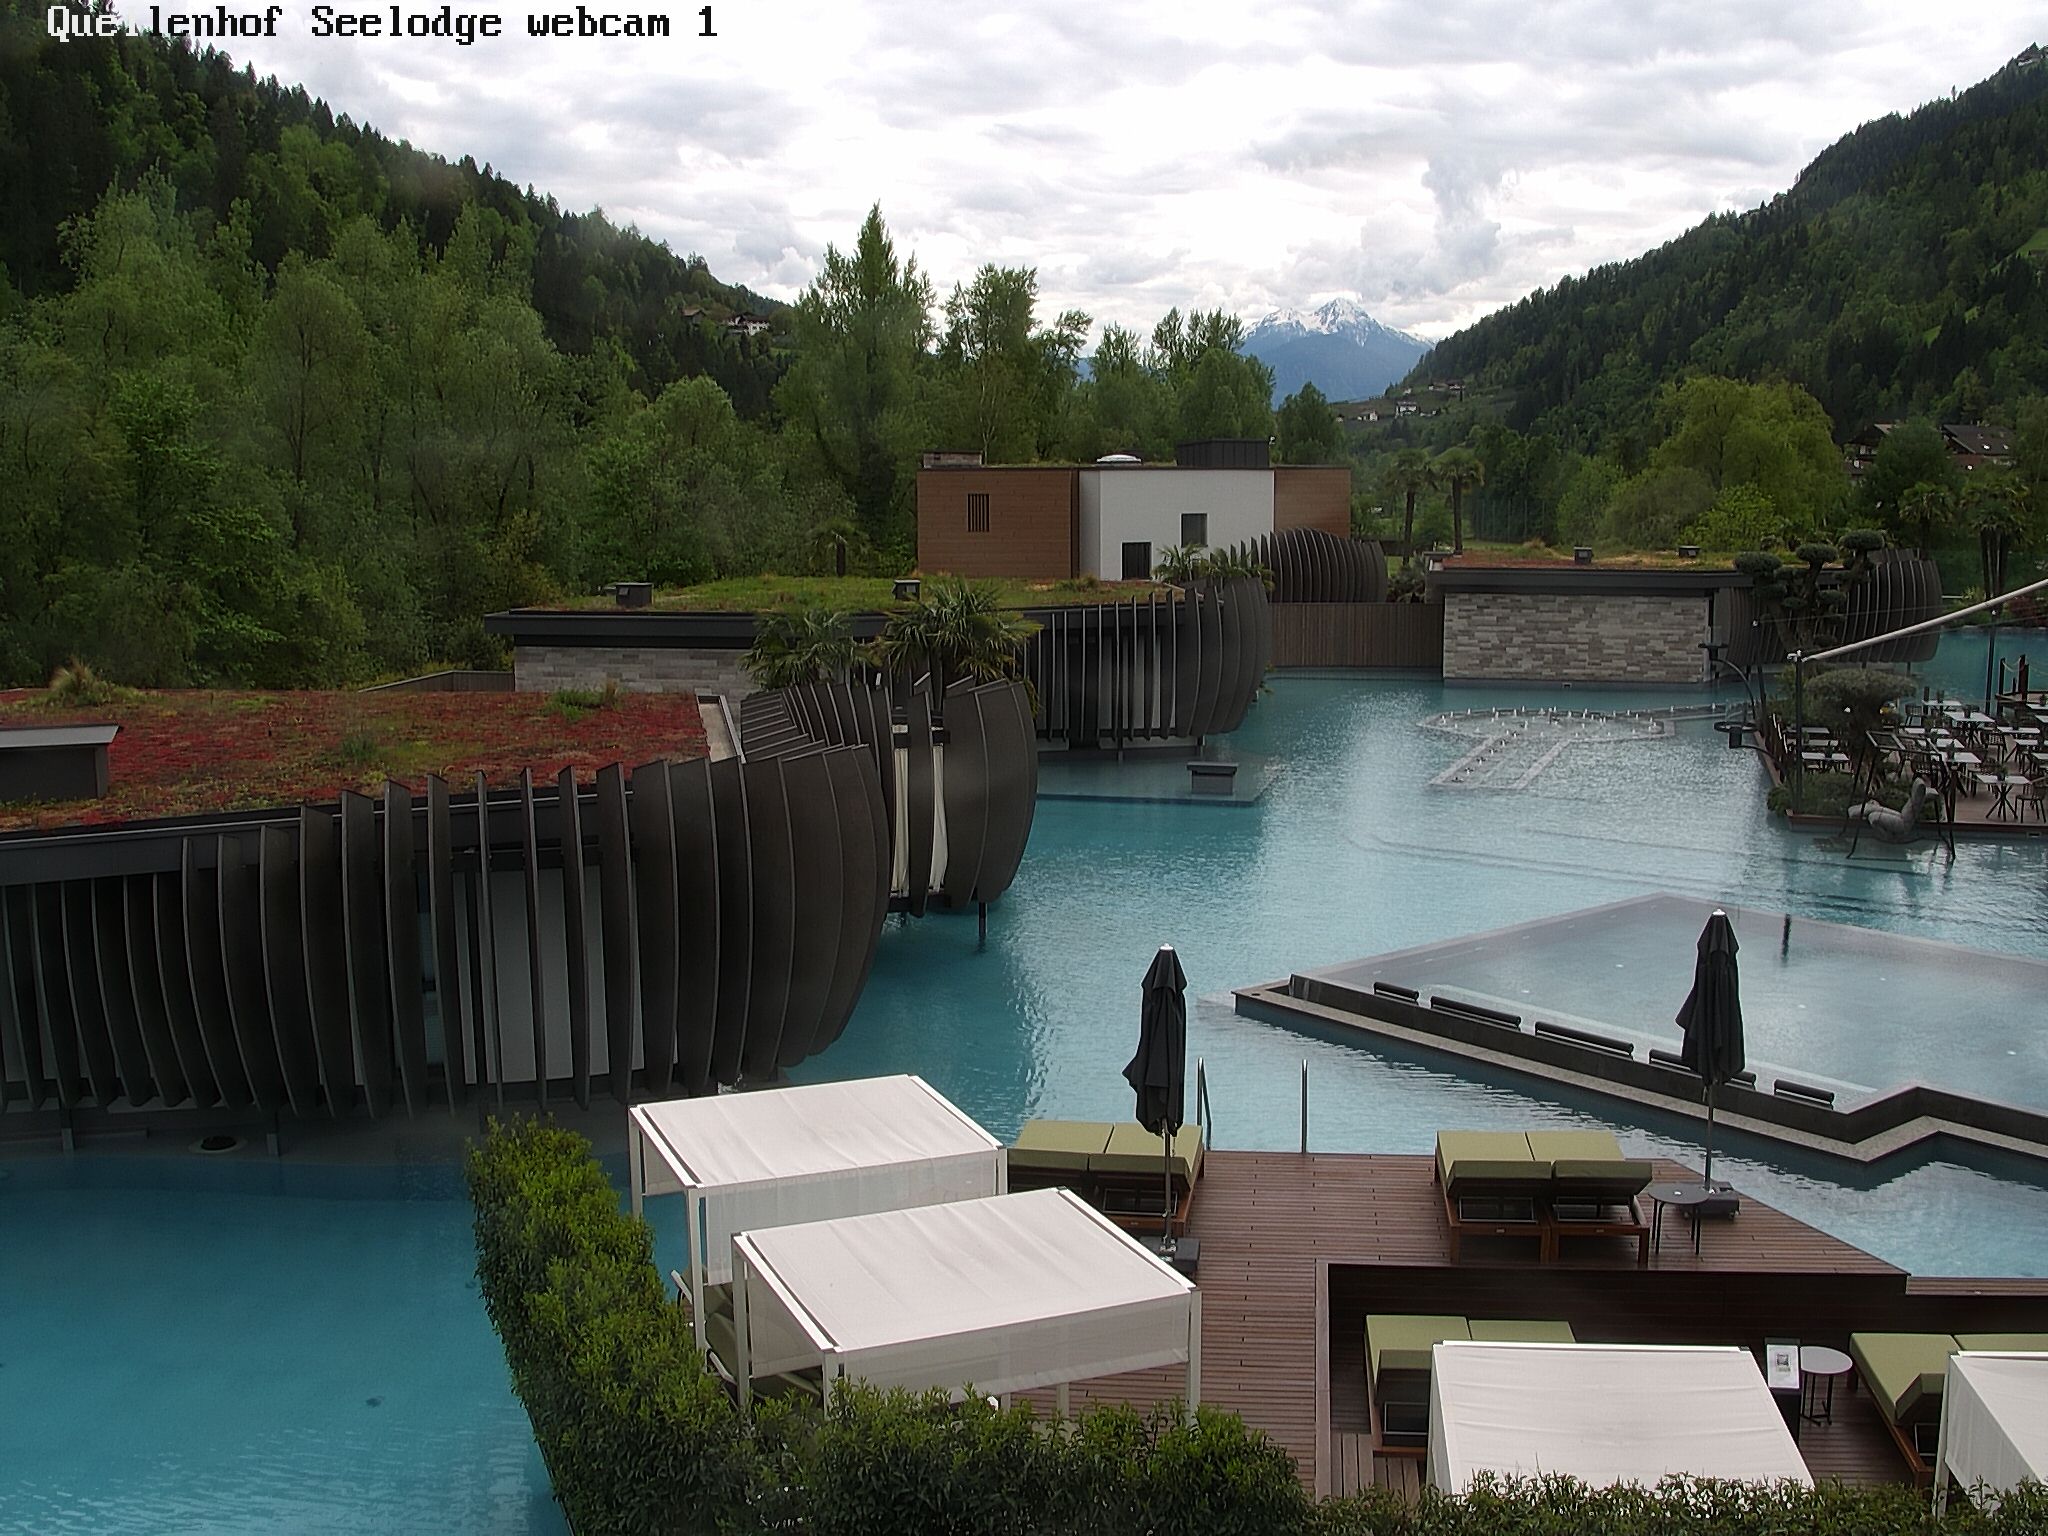 La webcam live del Quellenhof See Lodge